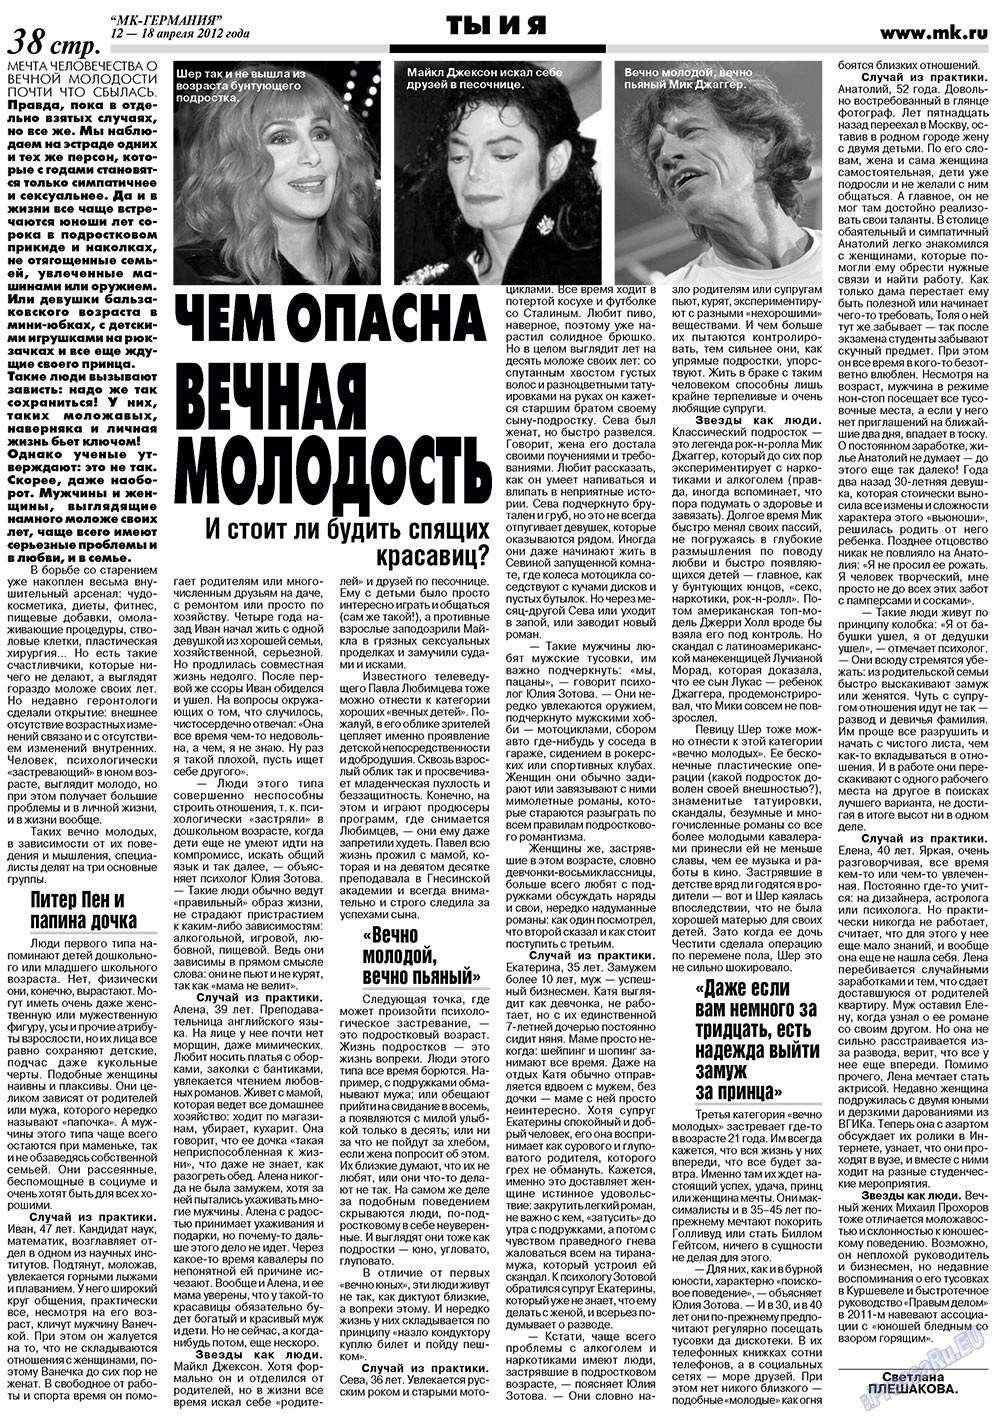 МК-Германия, газета. 2012 №15 стр.38